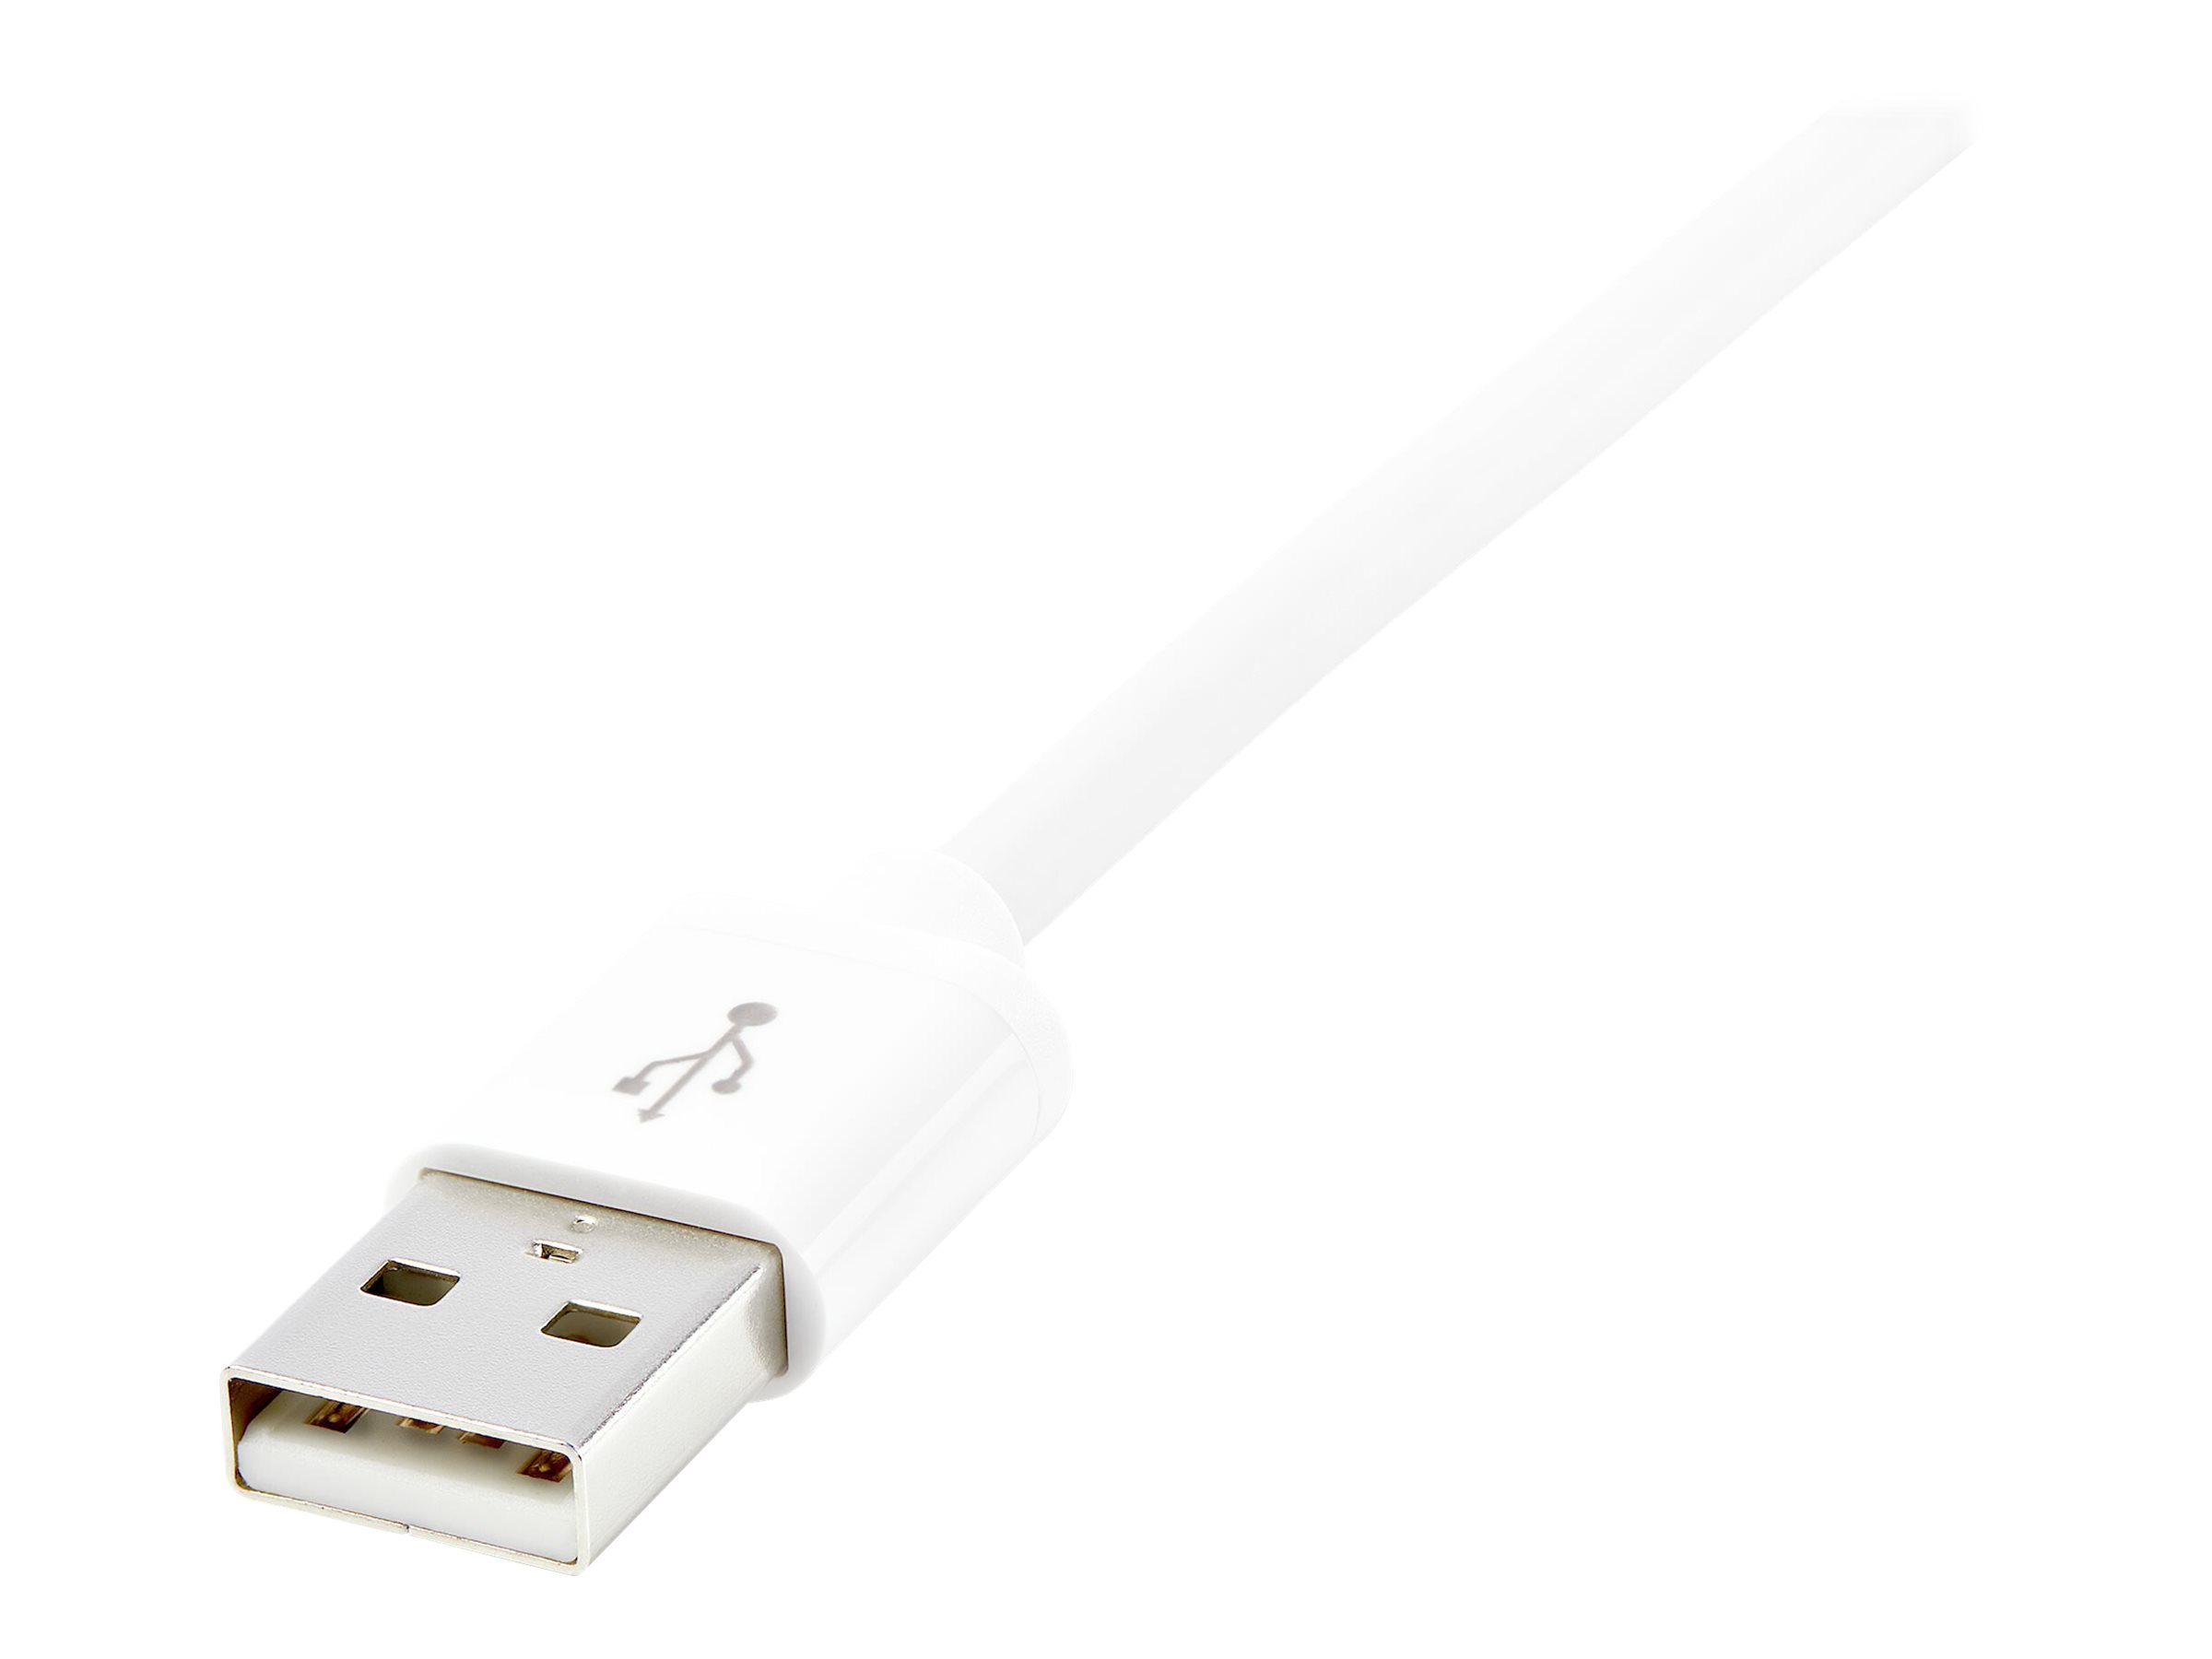 StarTech.com 1m Apple 8 Pin Lightning Connector auf USB Kabel